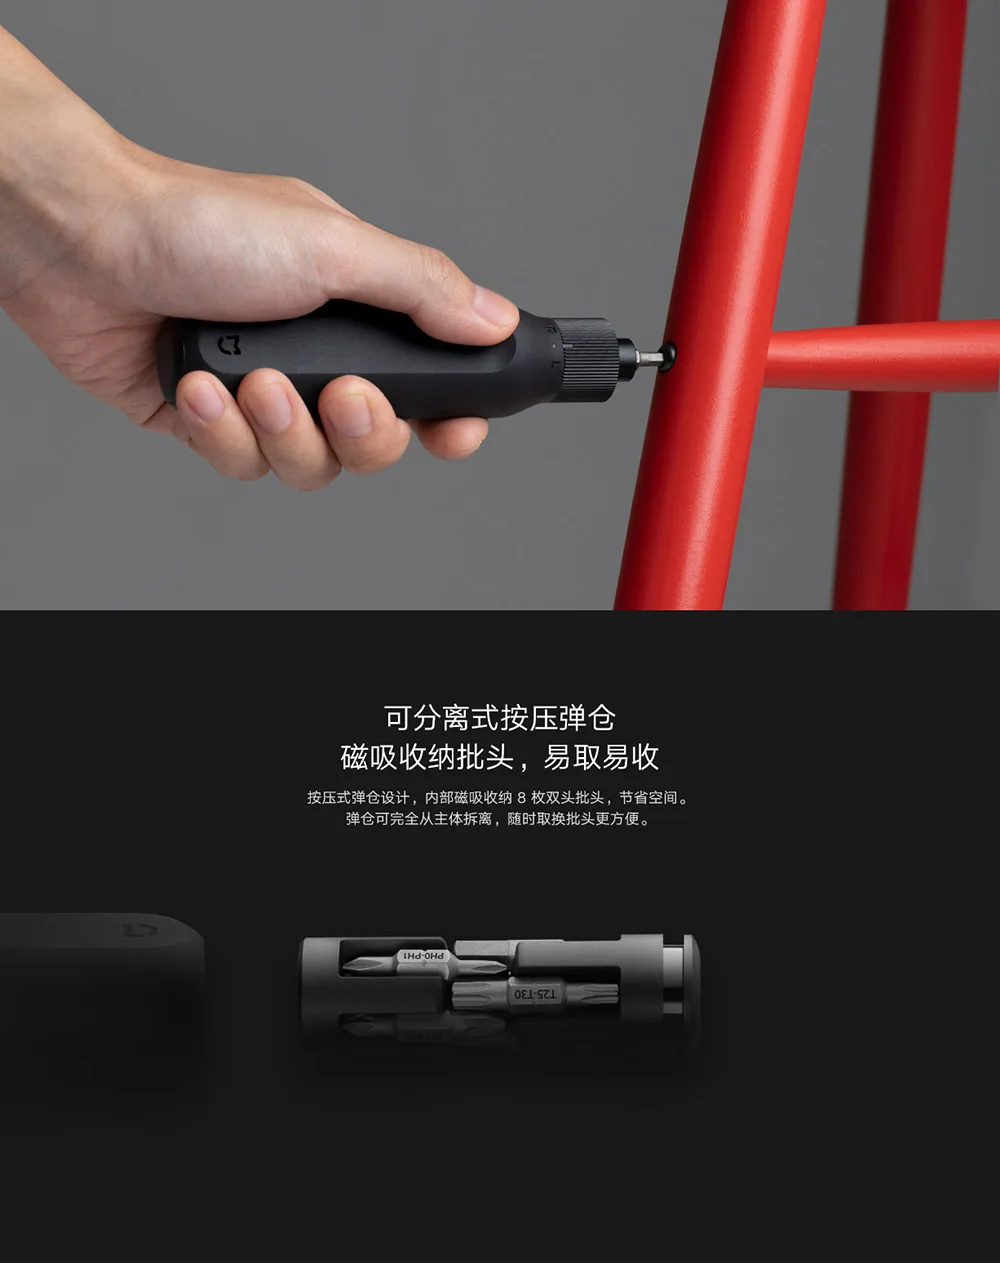 Xiaomi Mijia Ratchet Screwdriver